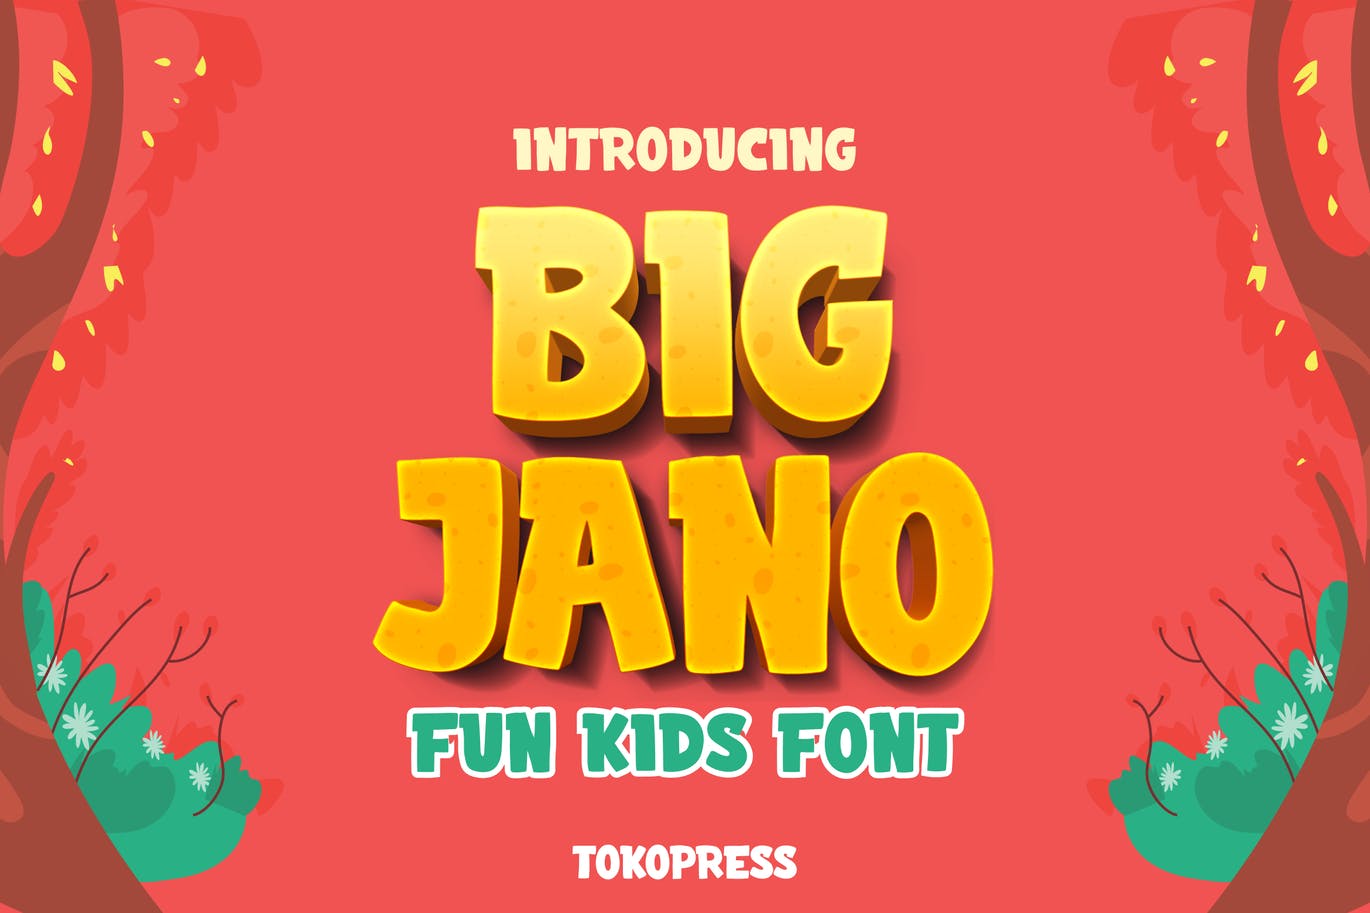 Big Jano